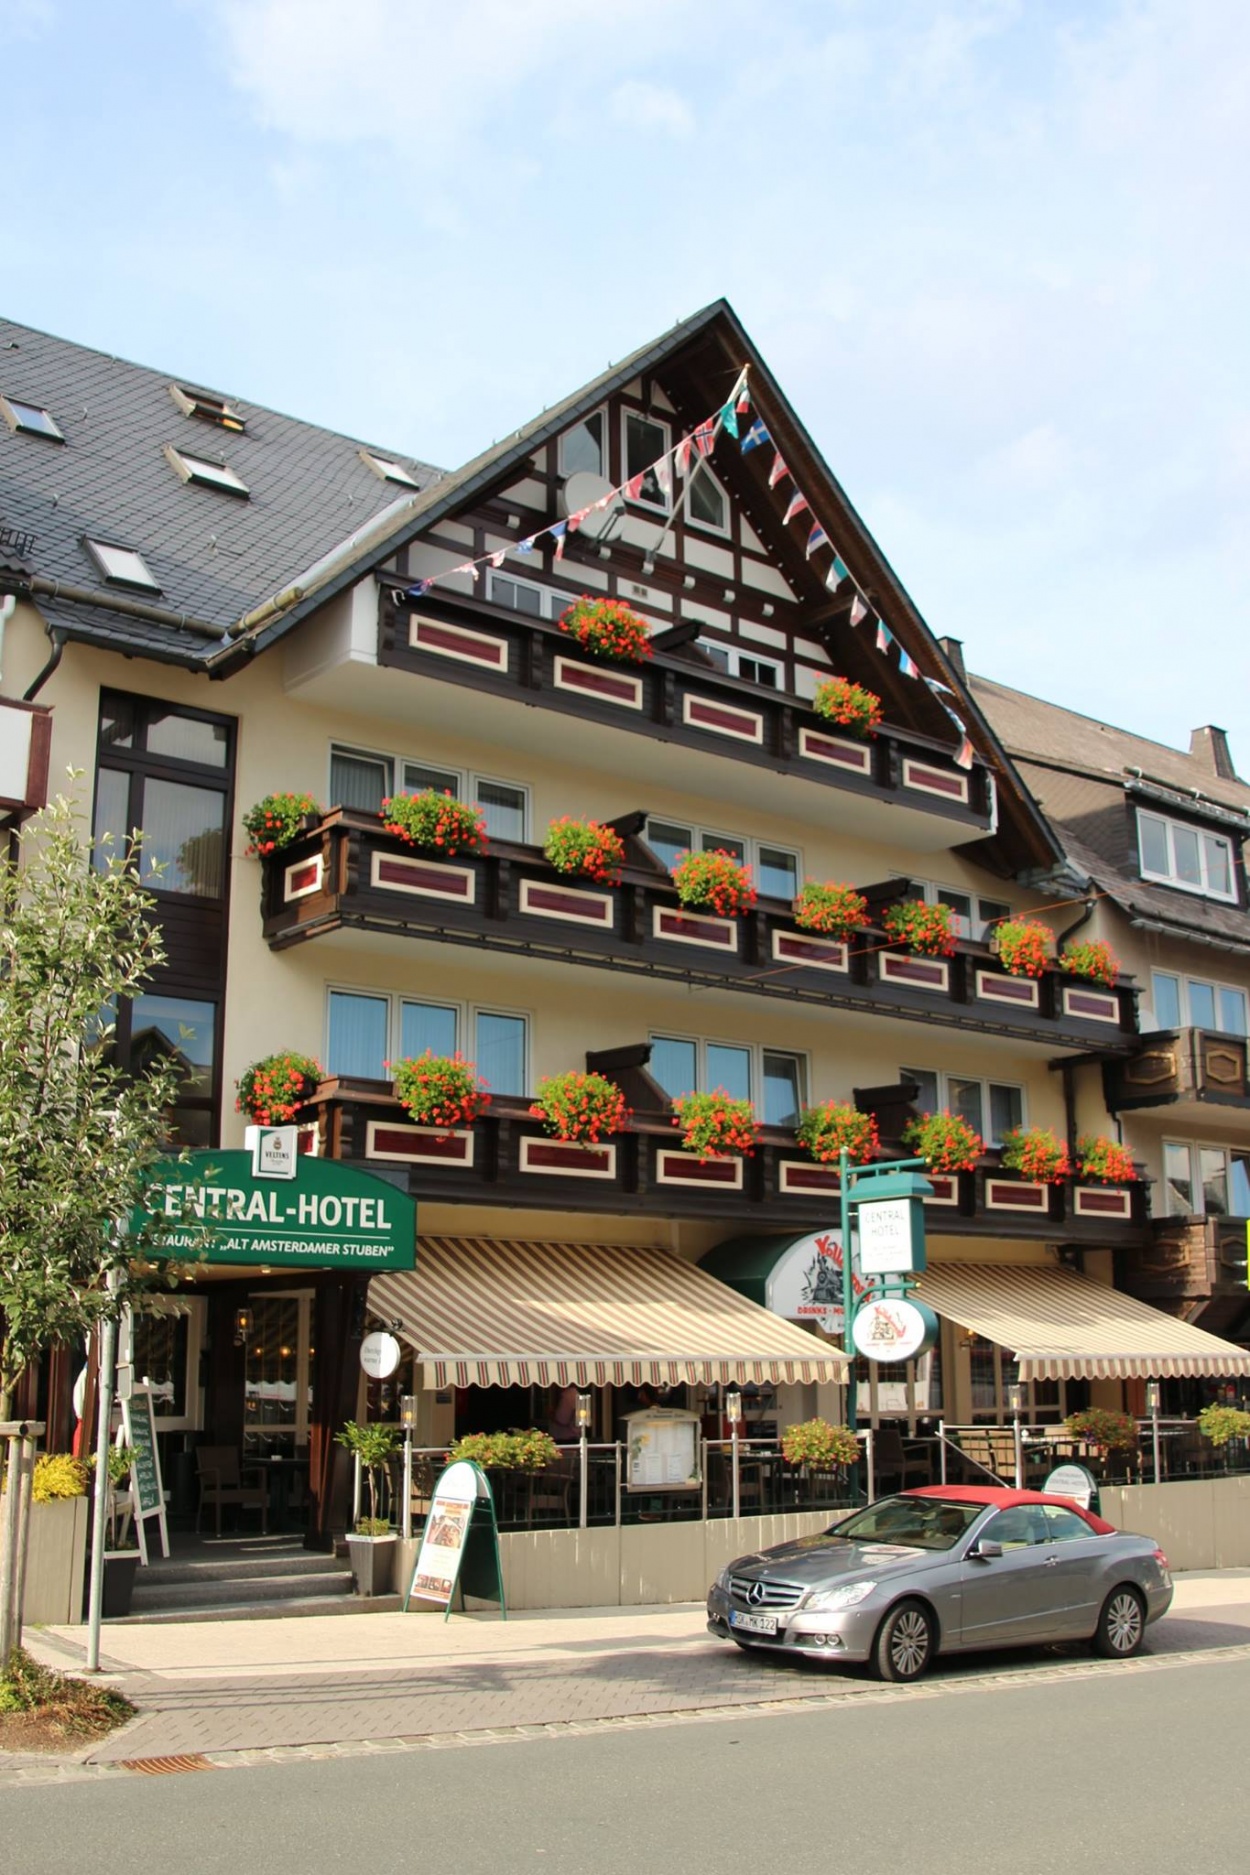  Central Hotel - Restaurant in Winterberg 